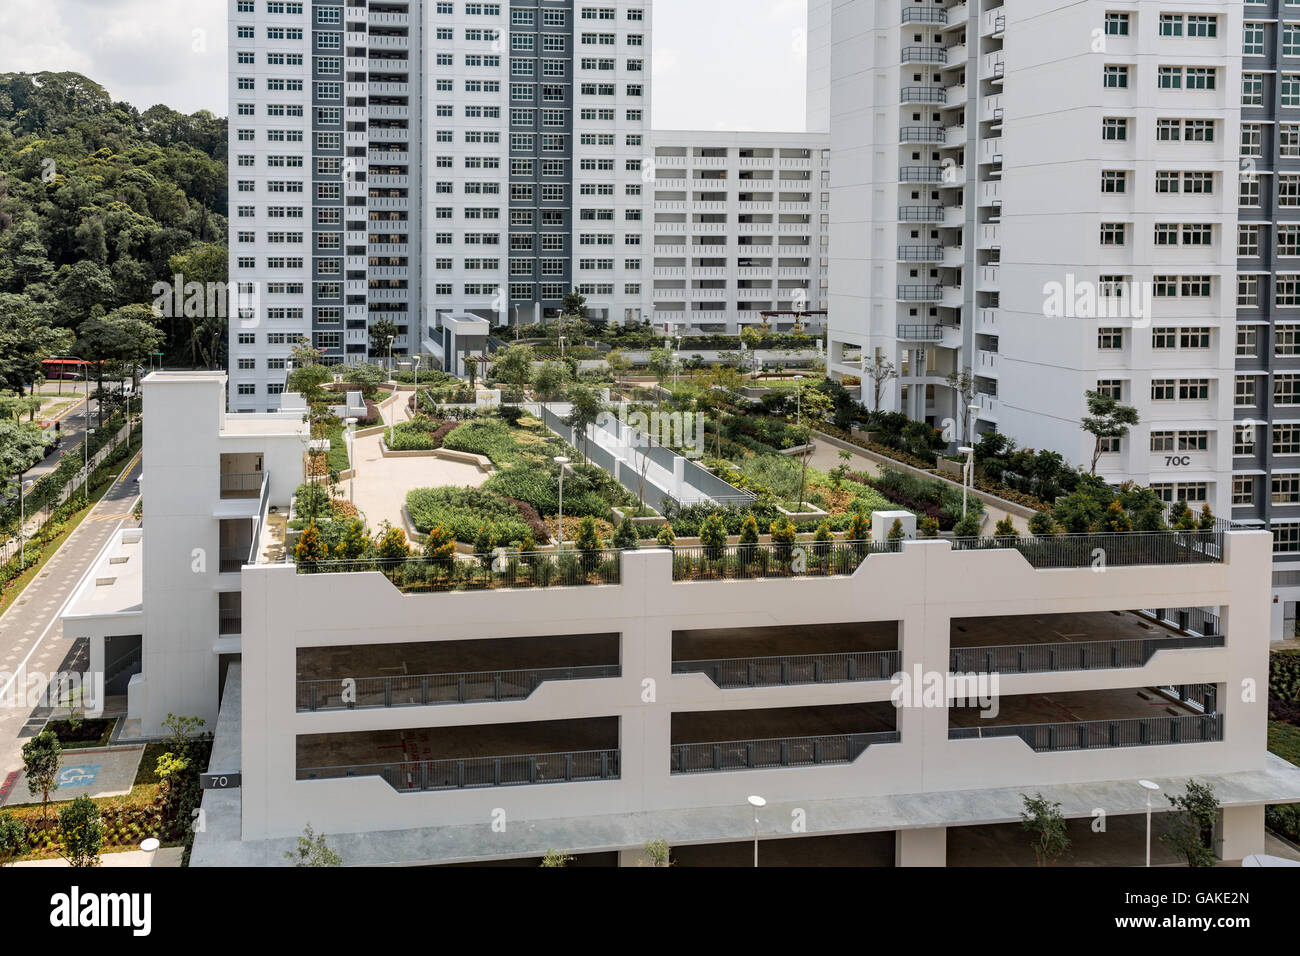 Roof top garden above car park in new Singapore public housing (Housing Development Board) apartment  blocks. Stock Photo